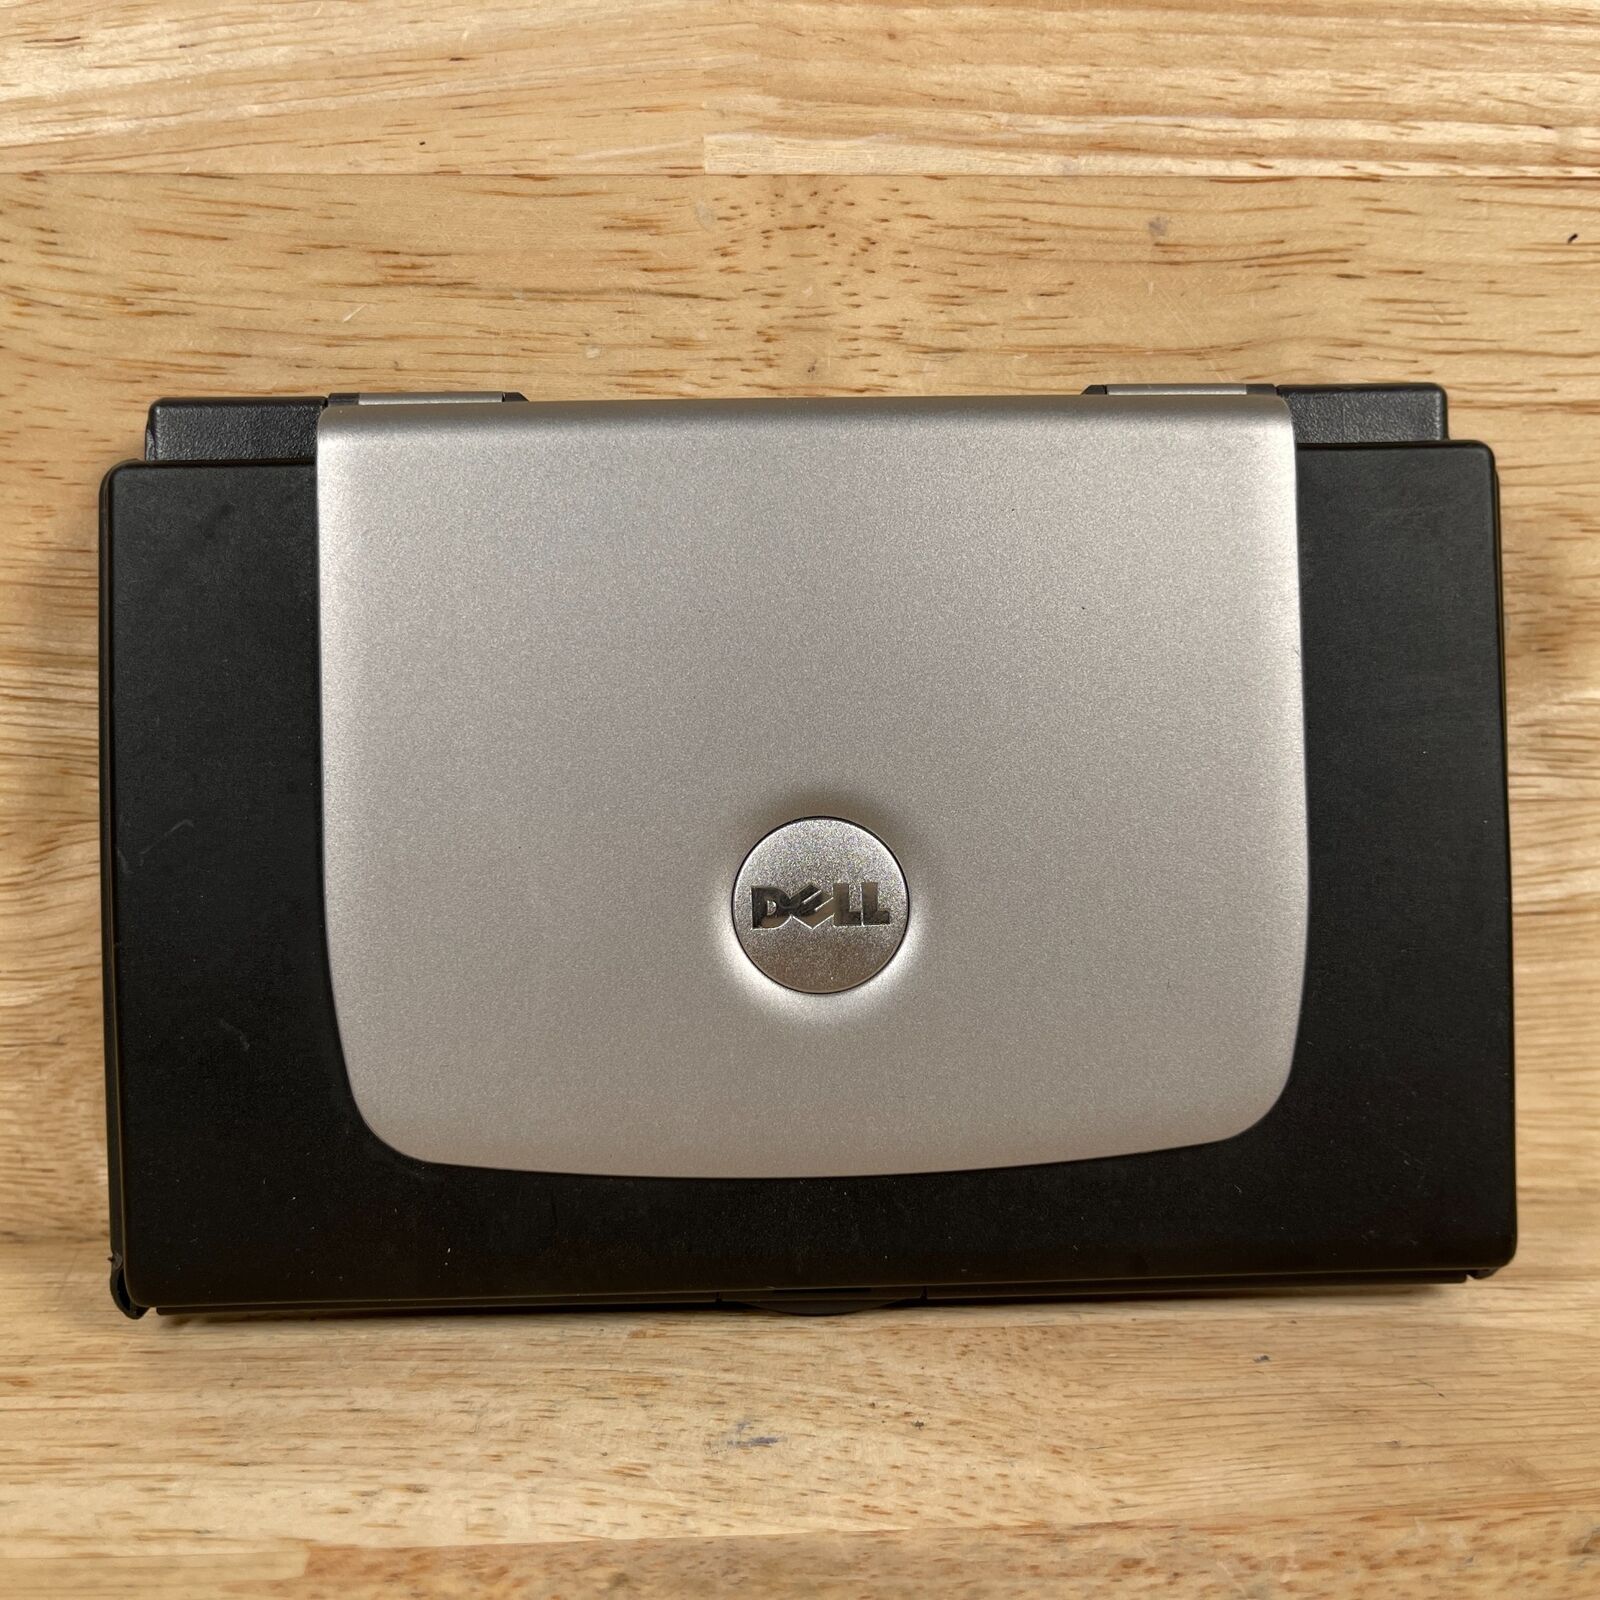 Dell Axim X5 G7L0-001 Black Pocket PC PDA Foldable QWERTY Standard Keyboard